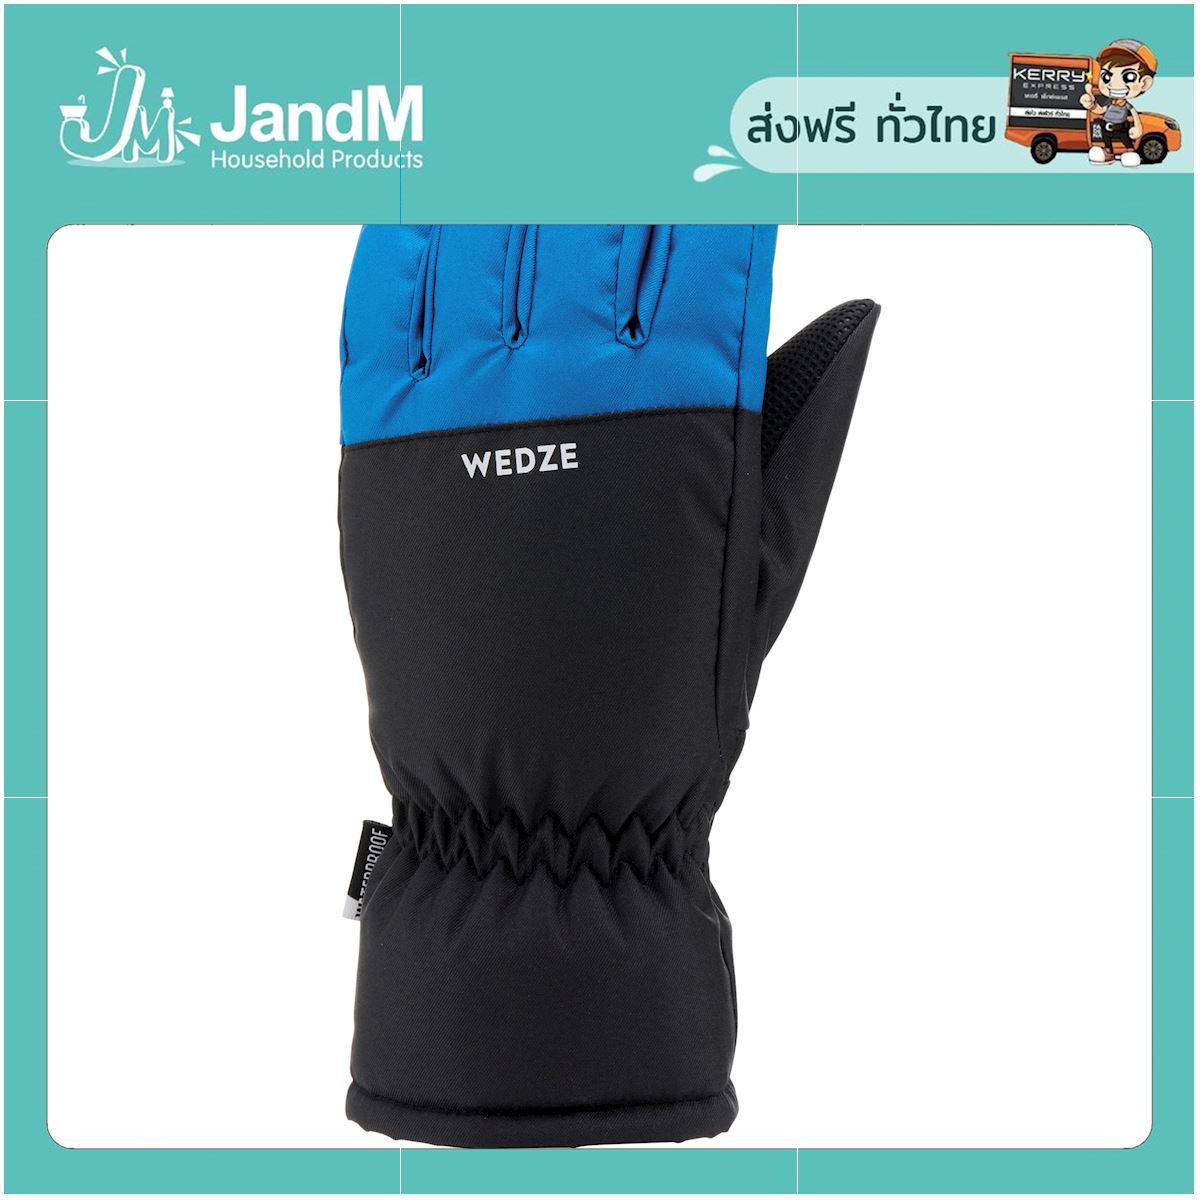 JandM ถุงมือสกีสำหรับเด็กรุ่น 100 สีฟ้า/เทา ส่งkerry มีเก็บเงินปลายทาง